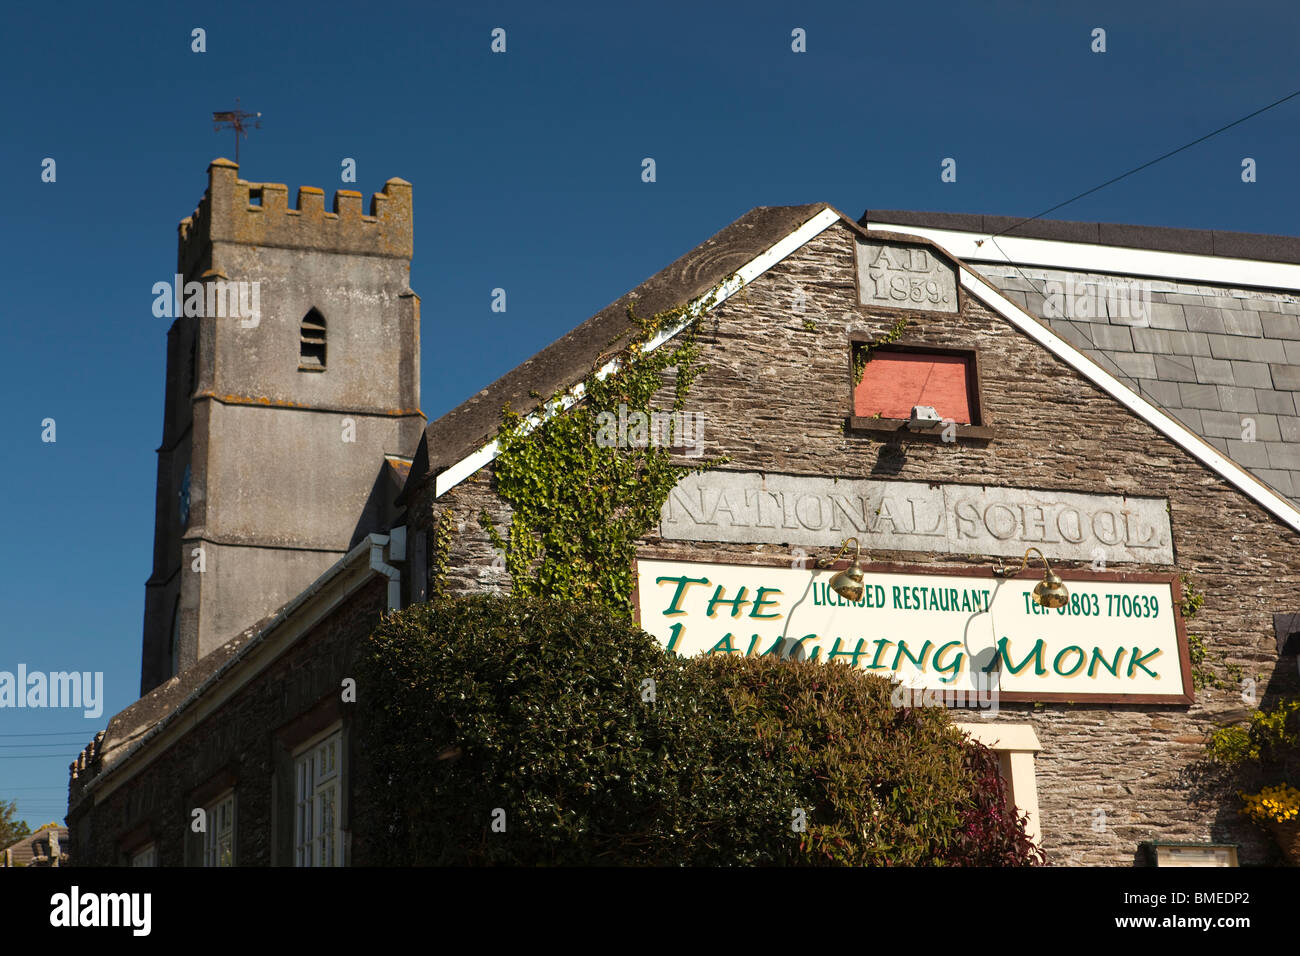 UK, England, Devon, Strete, Laughing Monk restaurant in former National School building Stock Photo